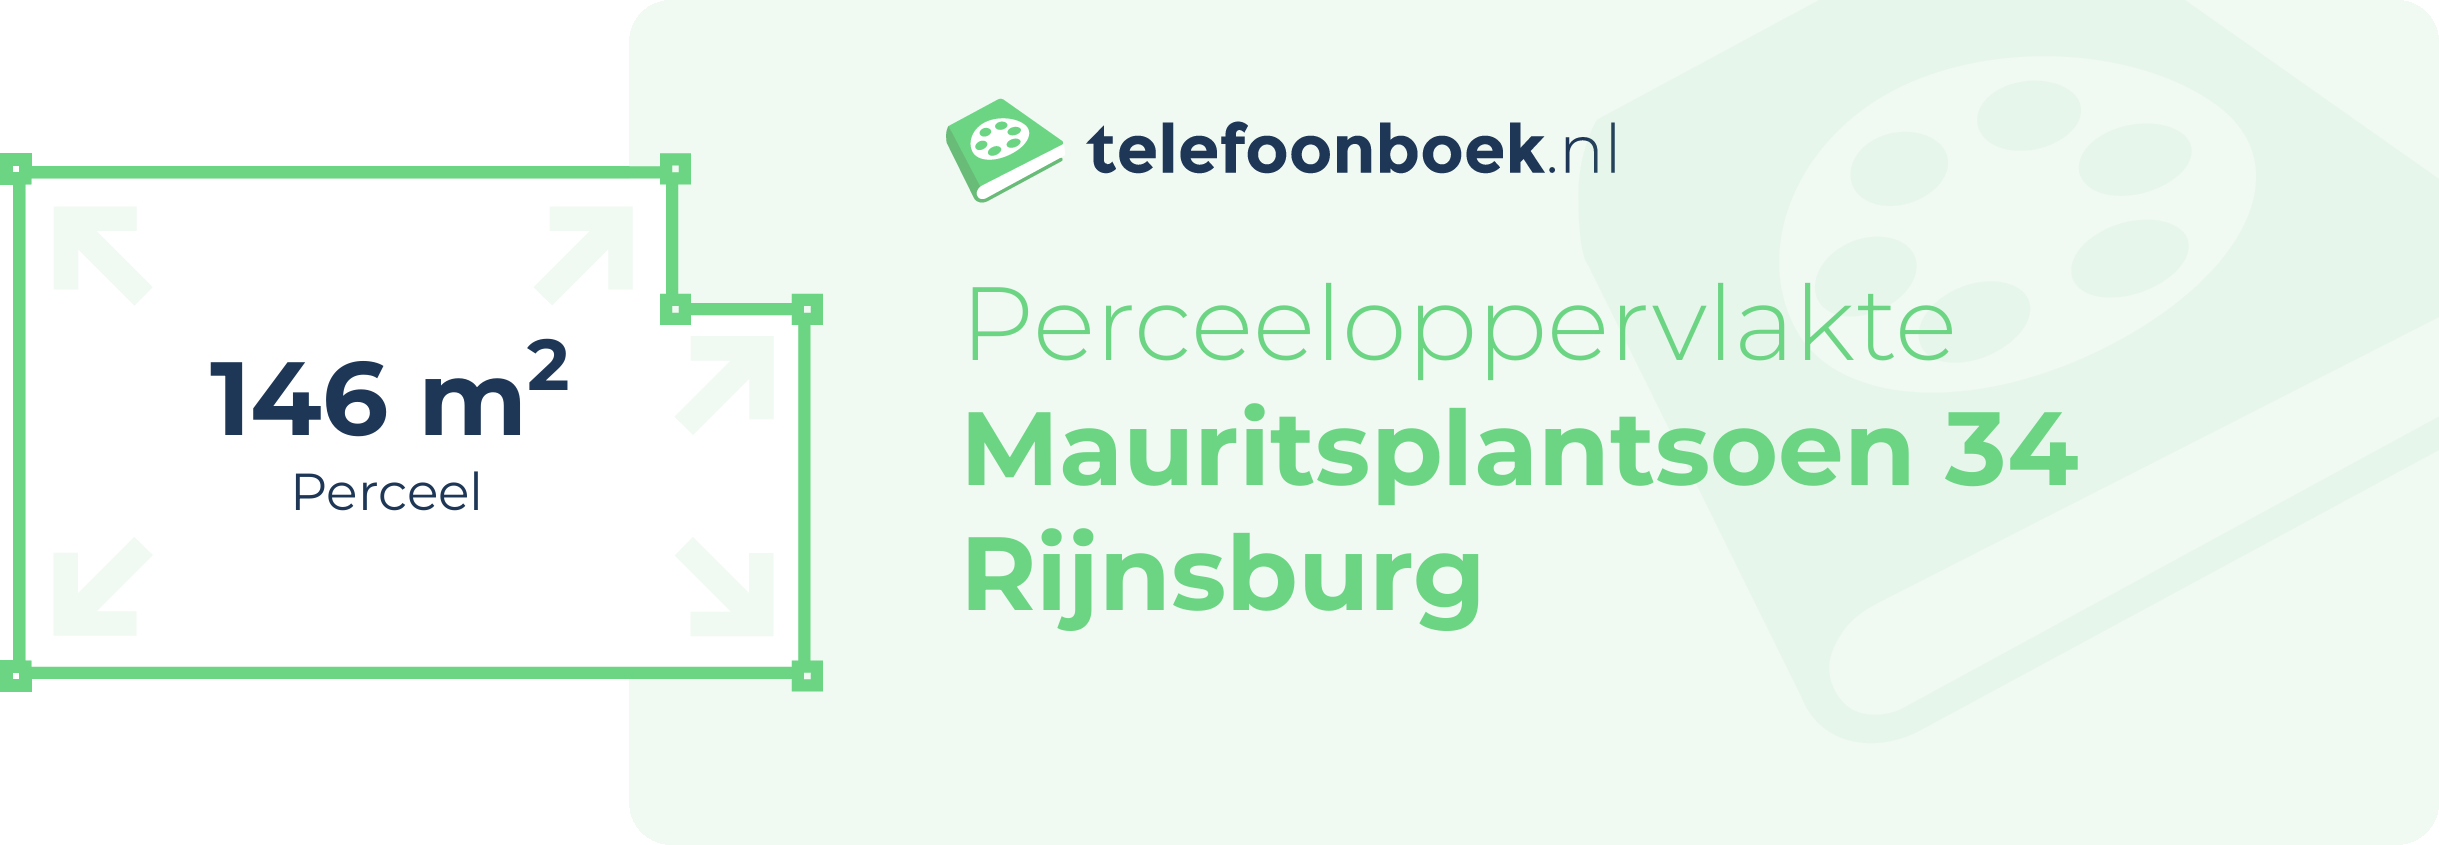 Perceeloppervlakte Mauritsplantsoen 34 Rijnsburg